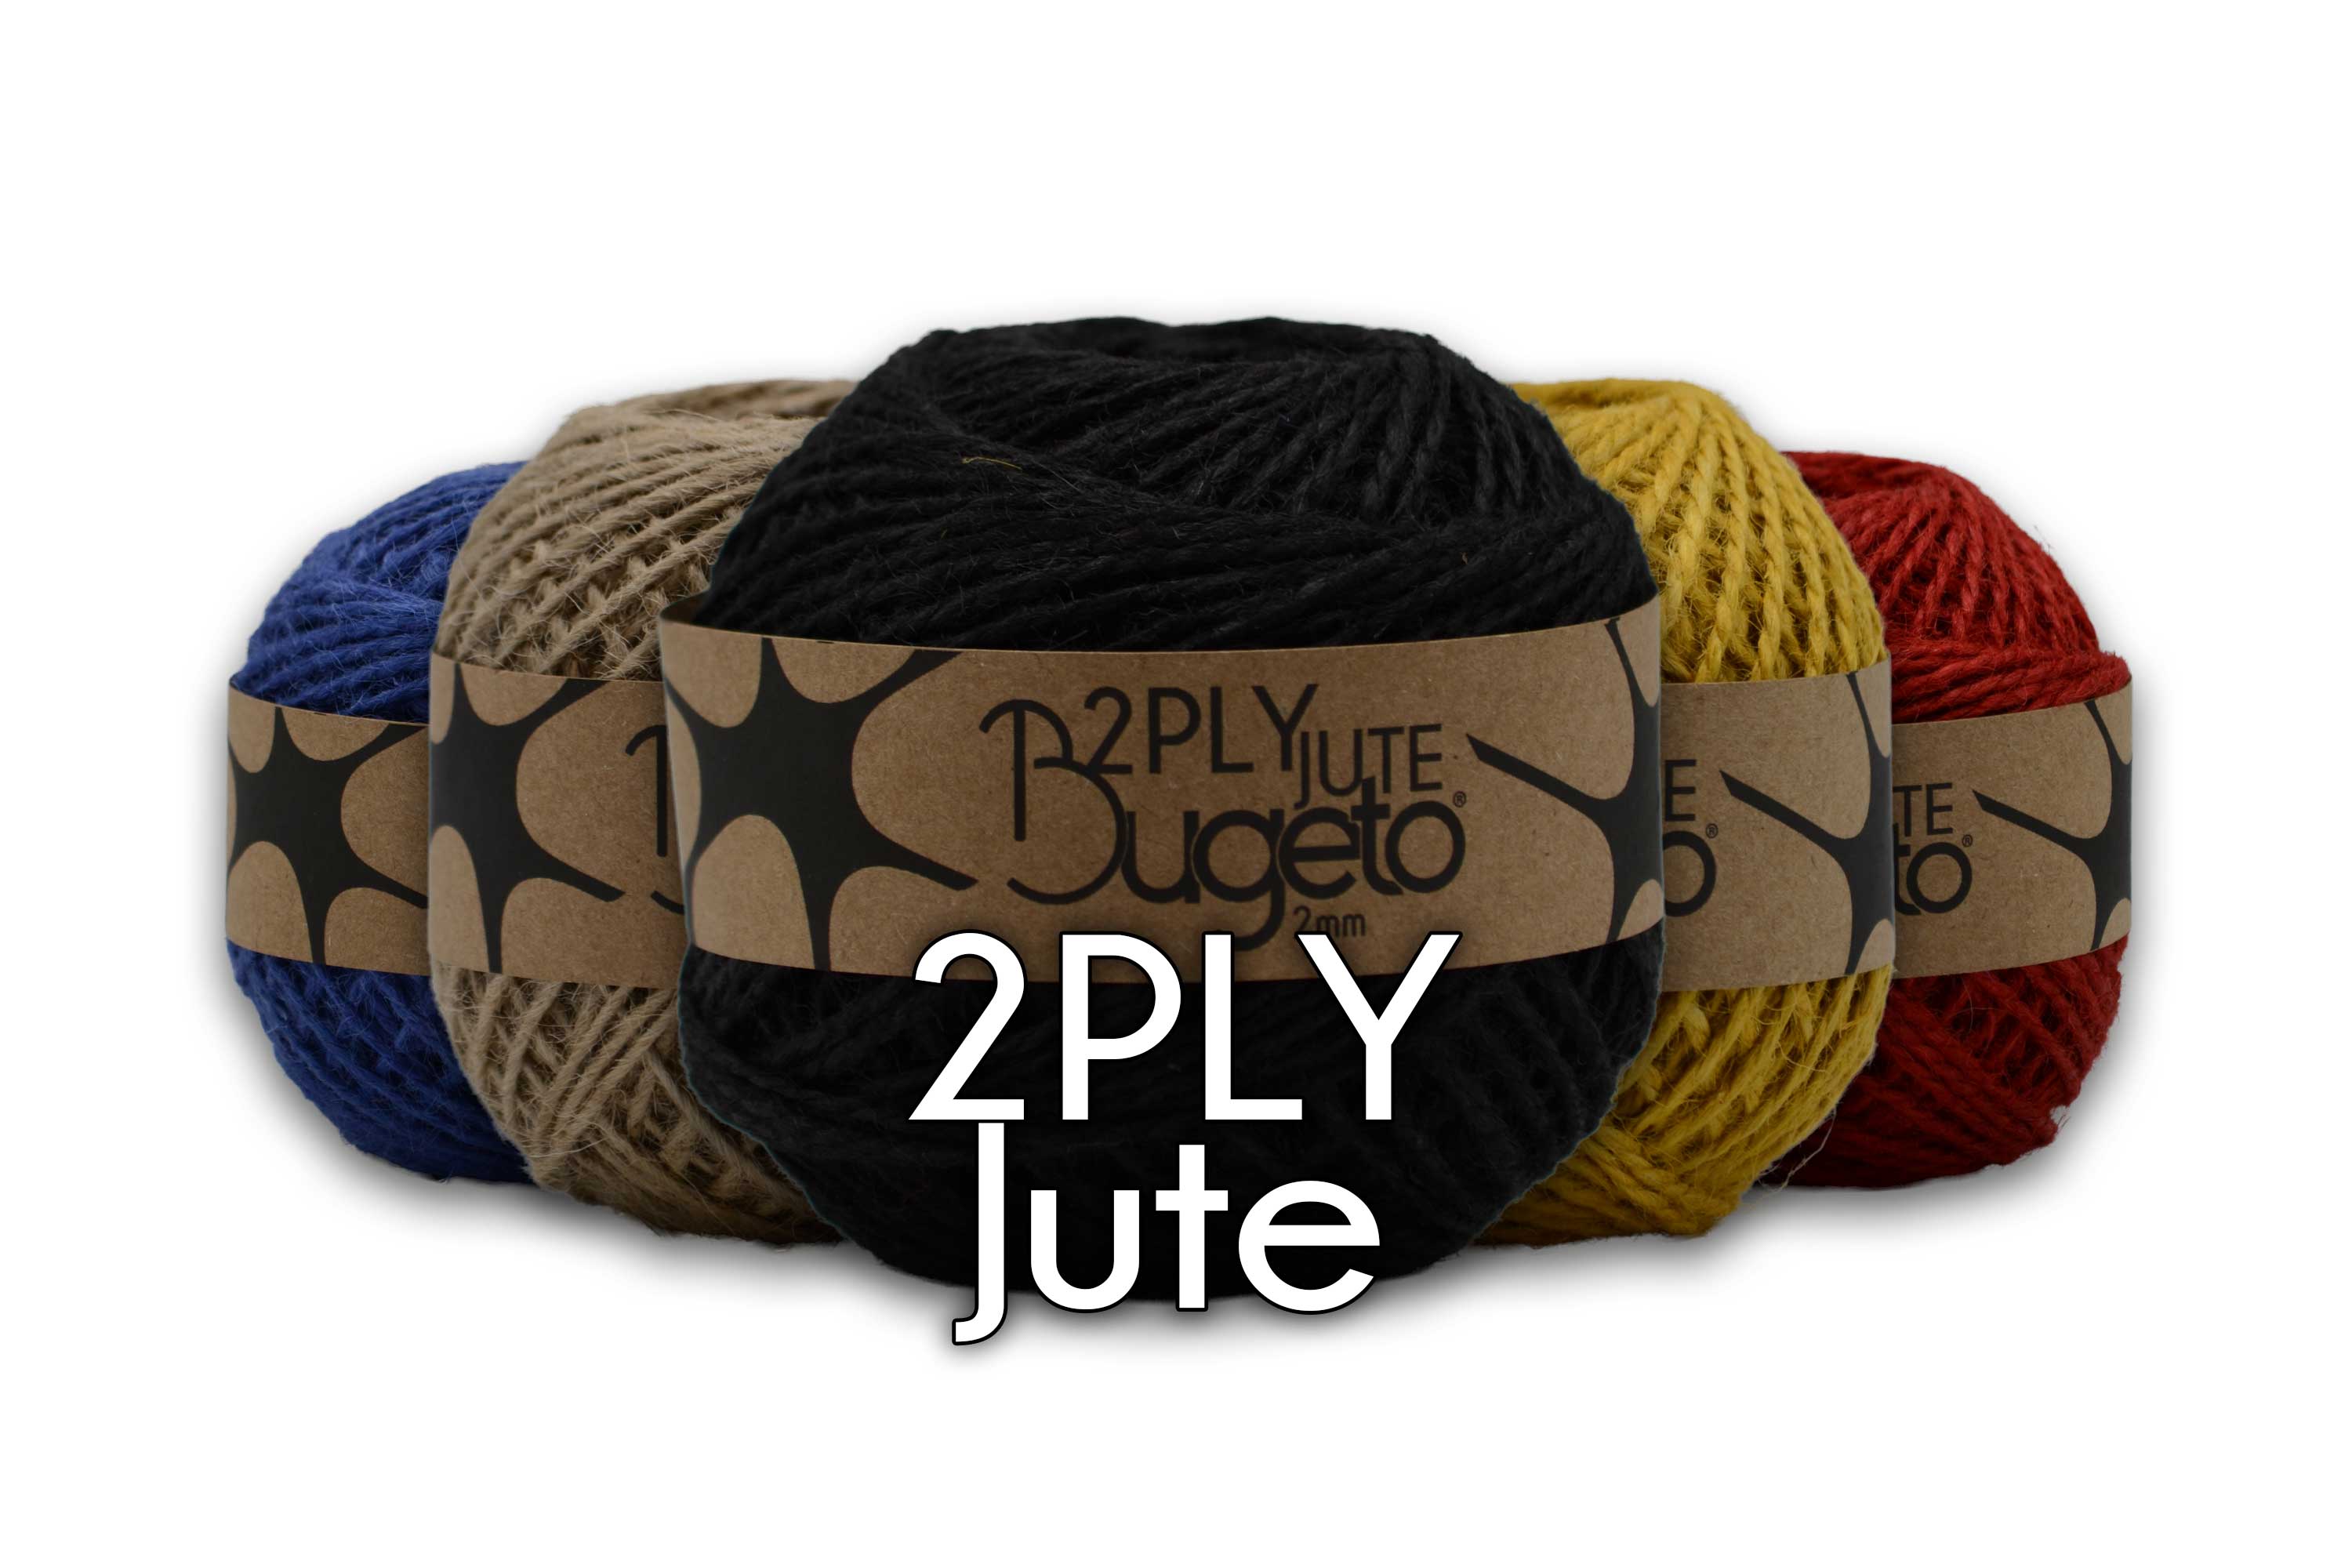 fanstasy yarn jute 2ply rope yarn colored jute colorfull fantasy yarns bugeto yarn